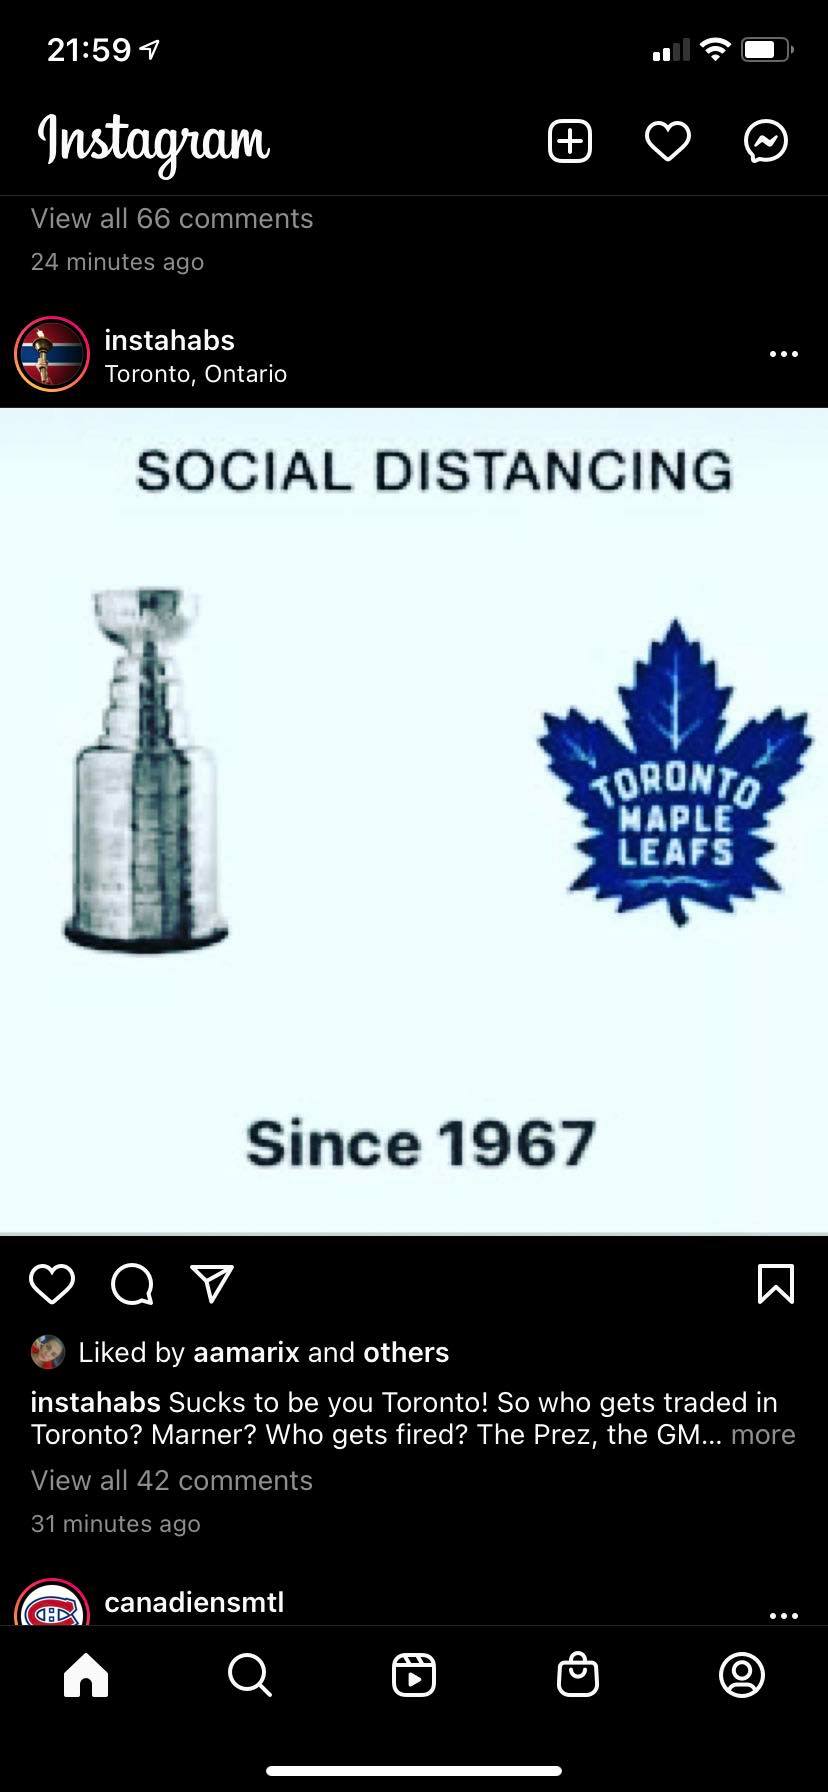 Meme des Leafs Leafs_11